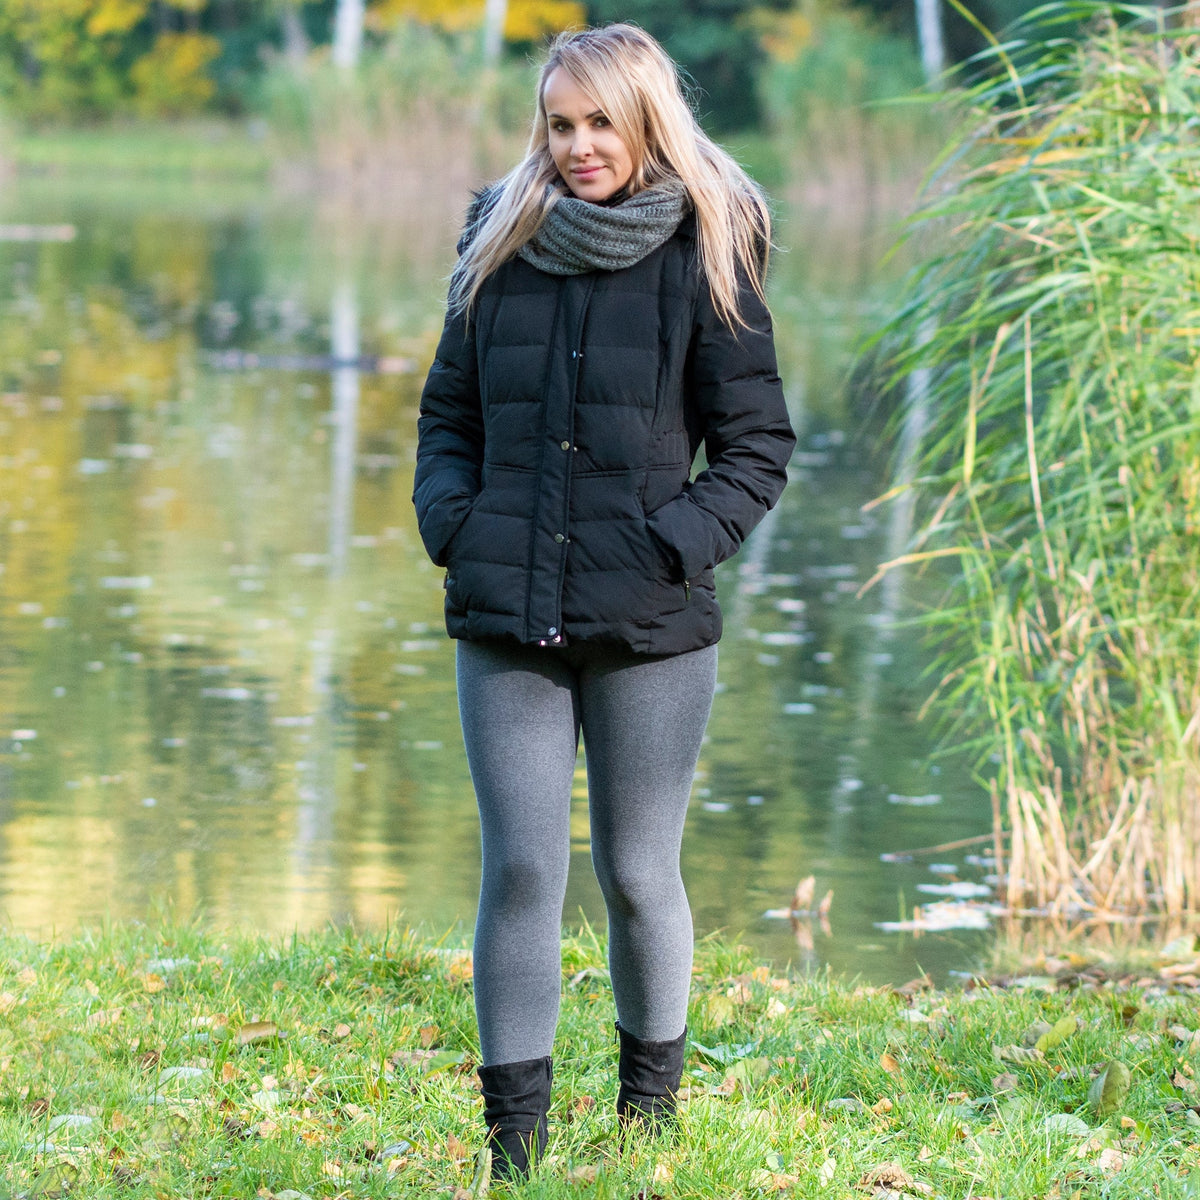 Women's Warm Winter Cotton Fleece Lined Thermal Leggings Black – CoSisNY